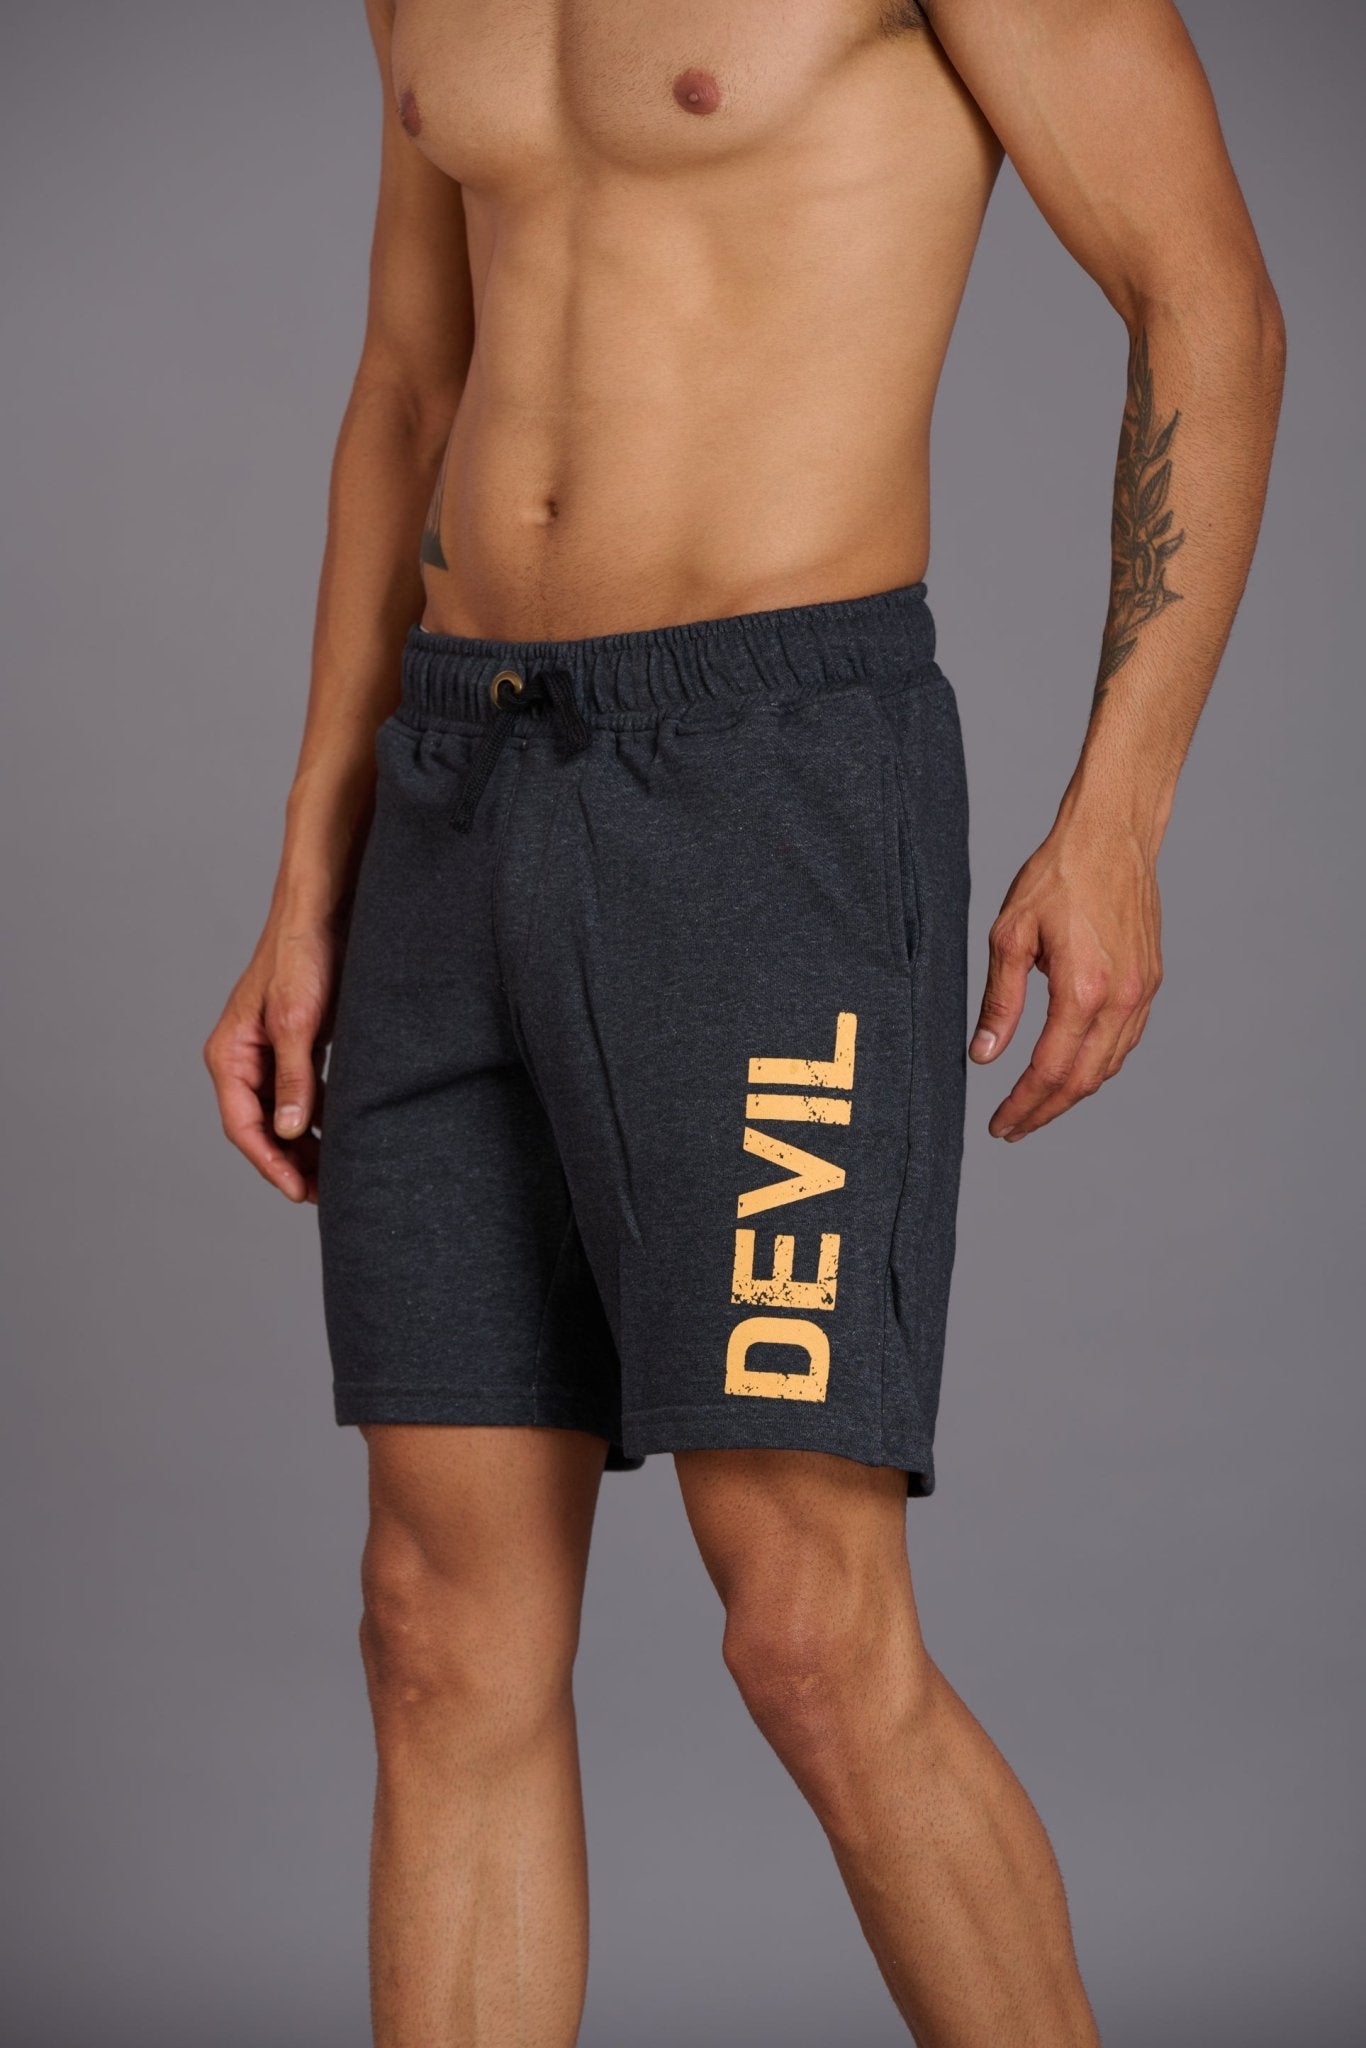 Devil Printed Yellow Shorts for Men - Go Devil